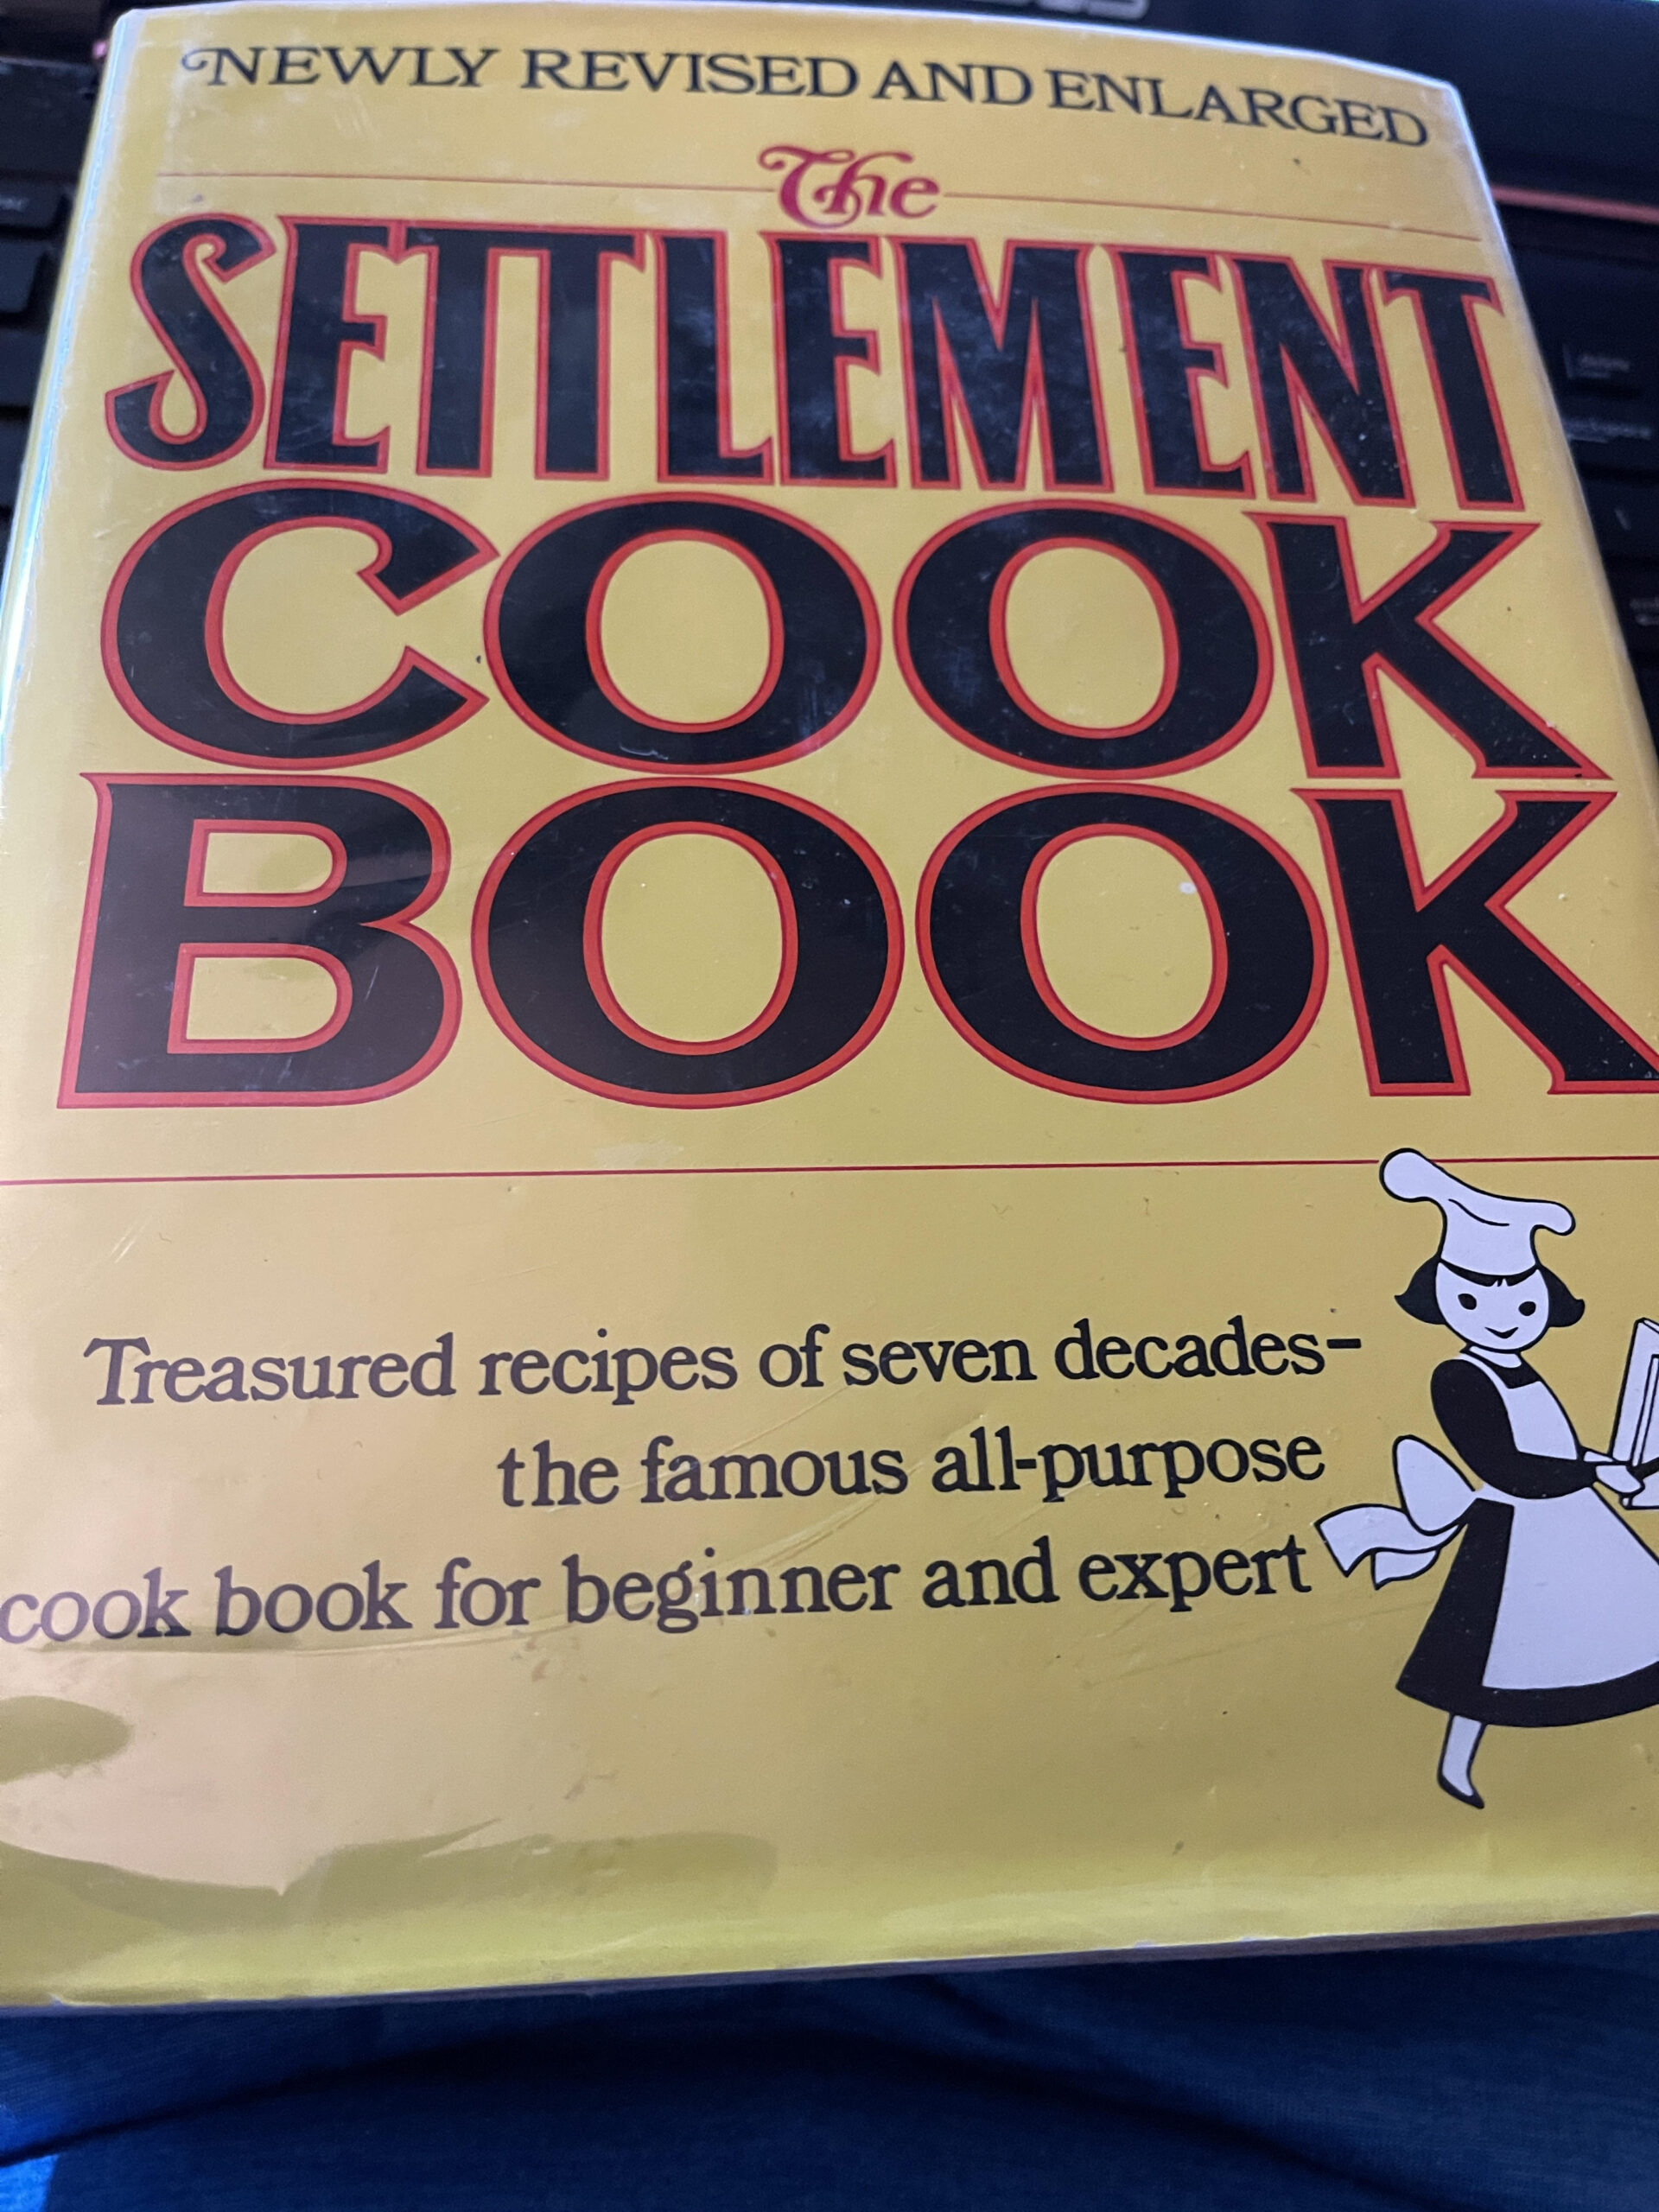 settlement cookbook, revised and enlarged